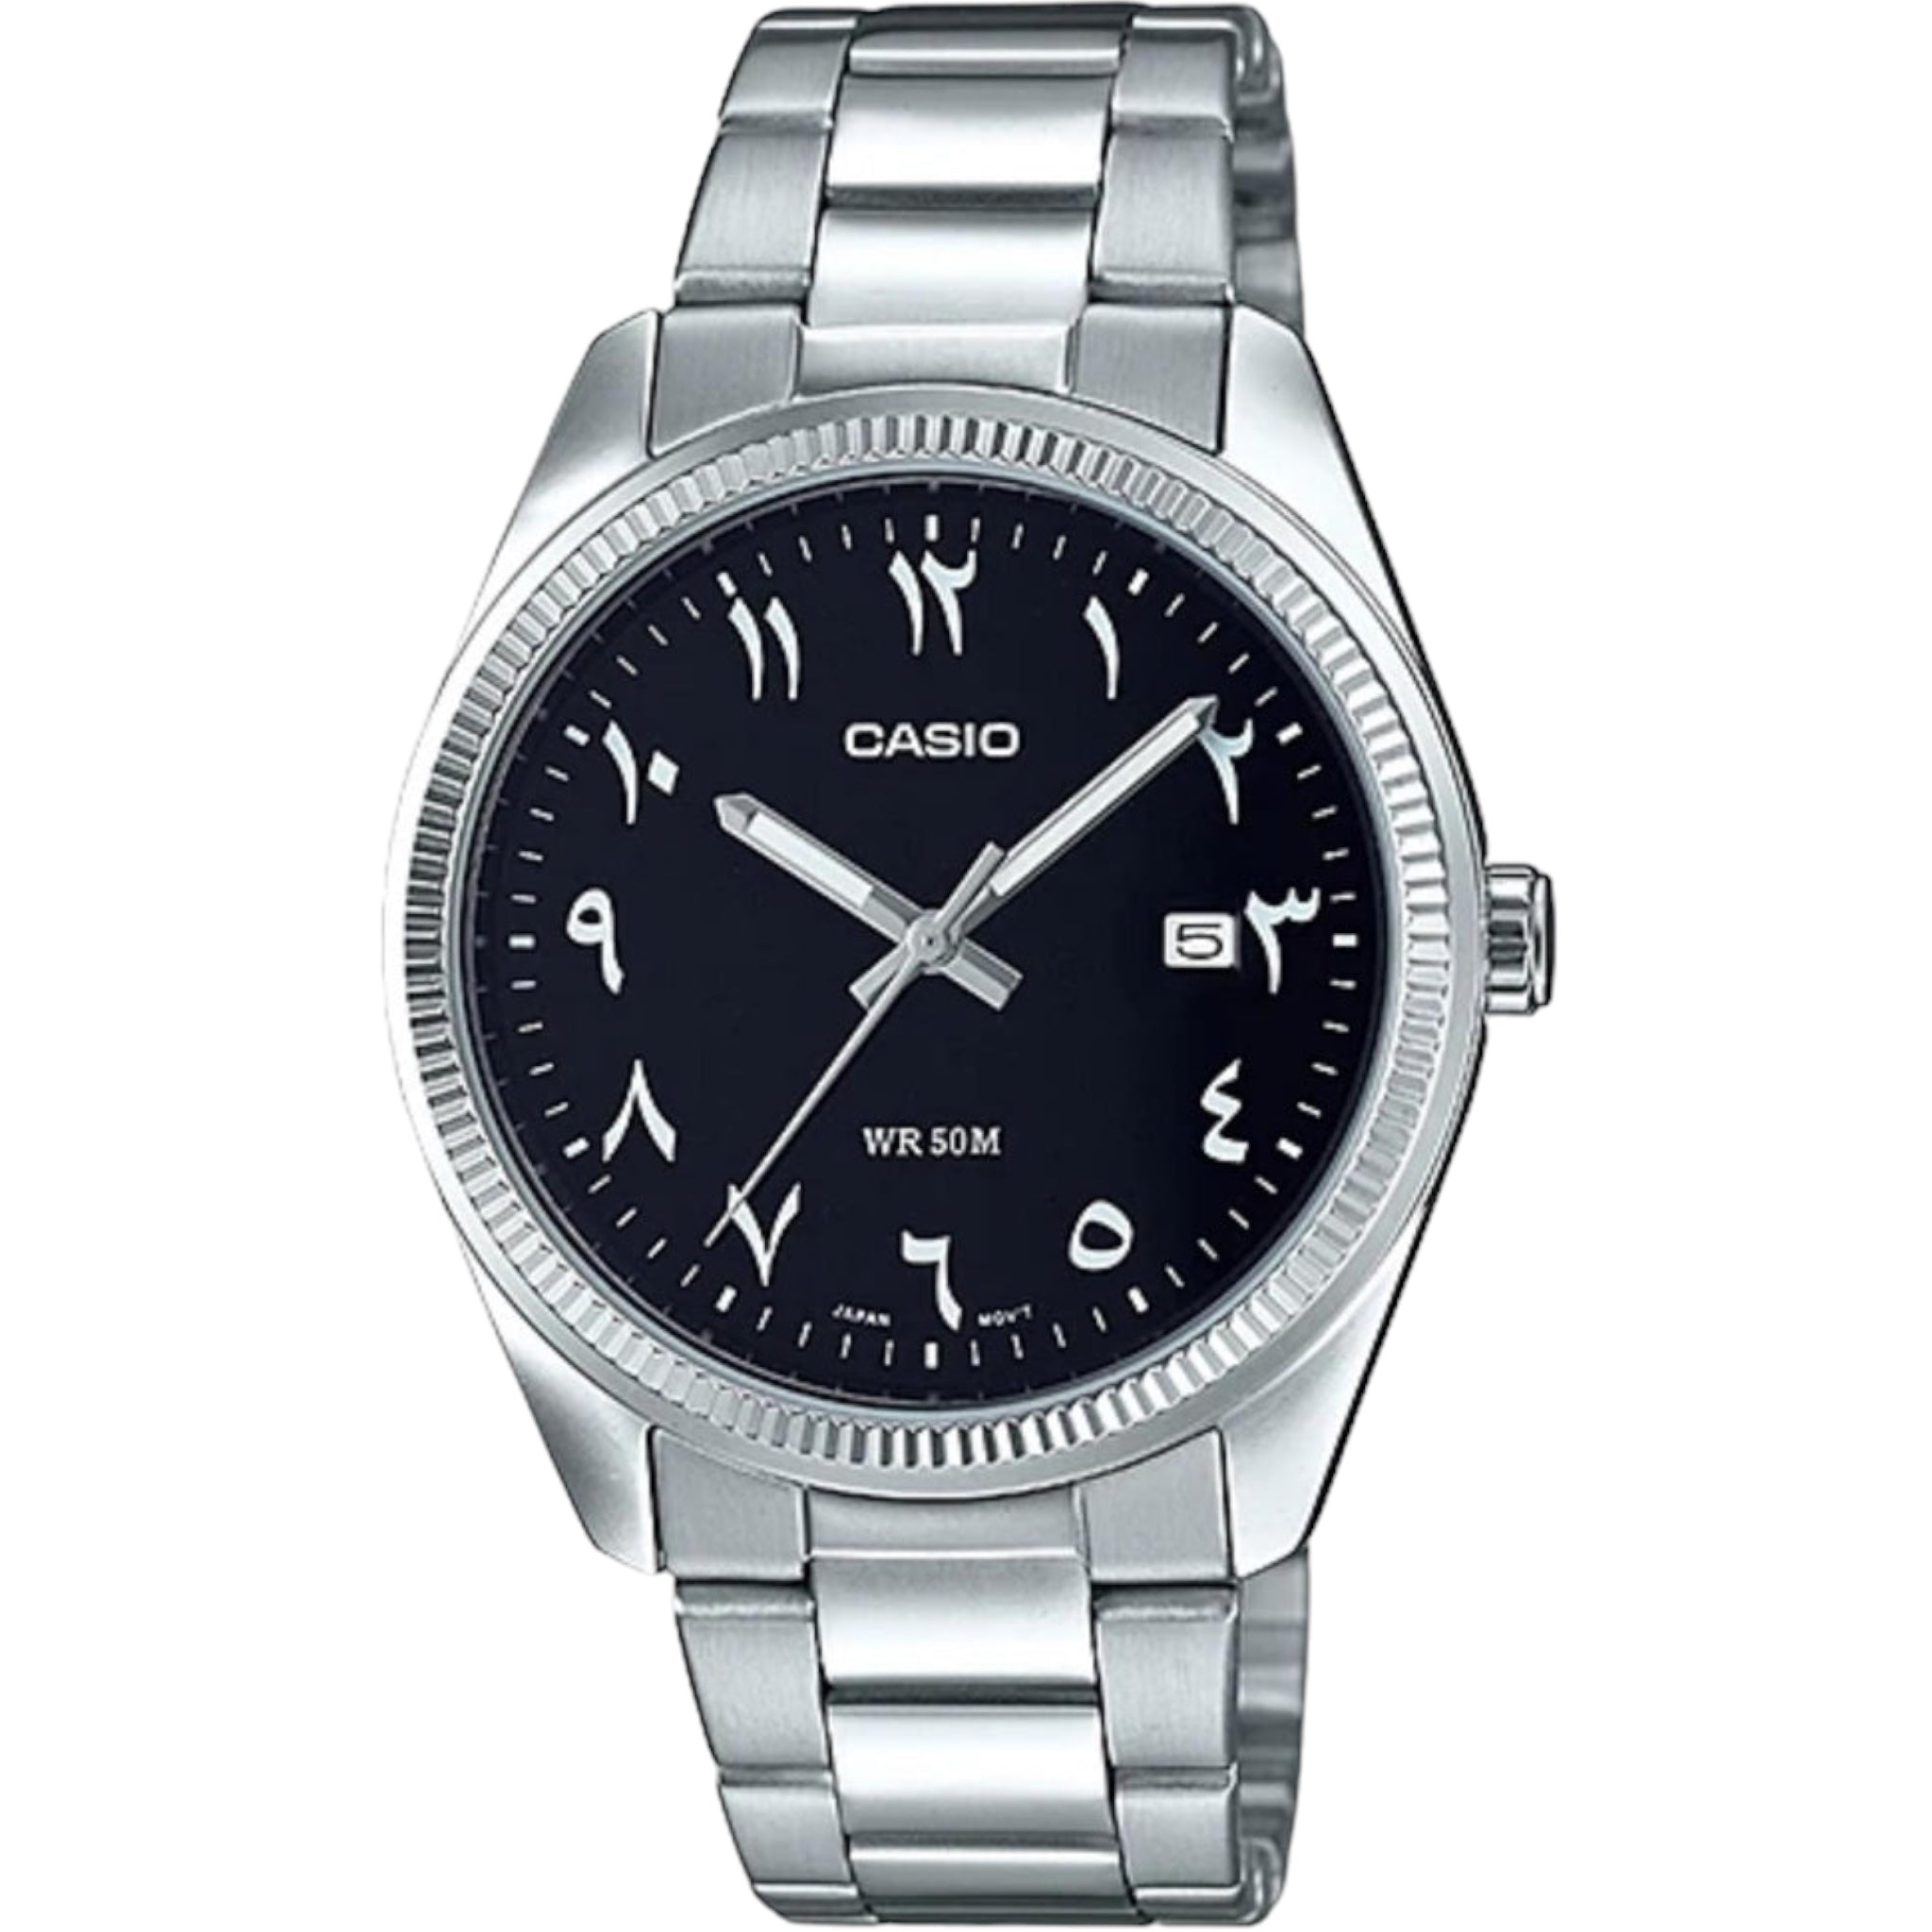 Casio Arabic Dial Men's Watch MTP-1302D-1B3 Black